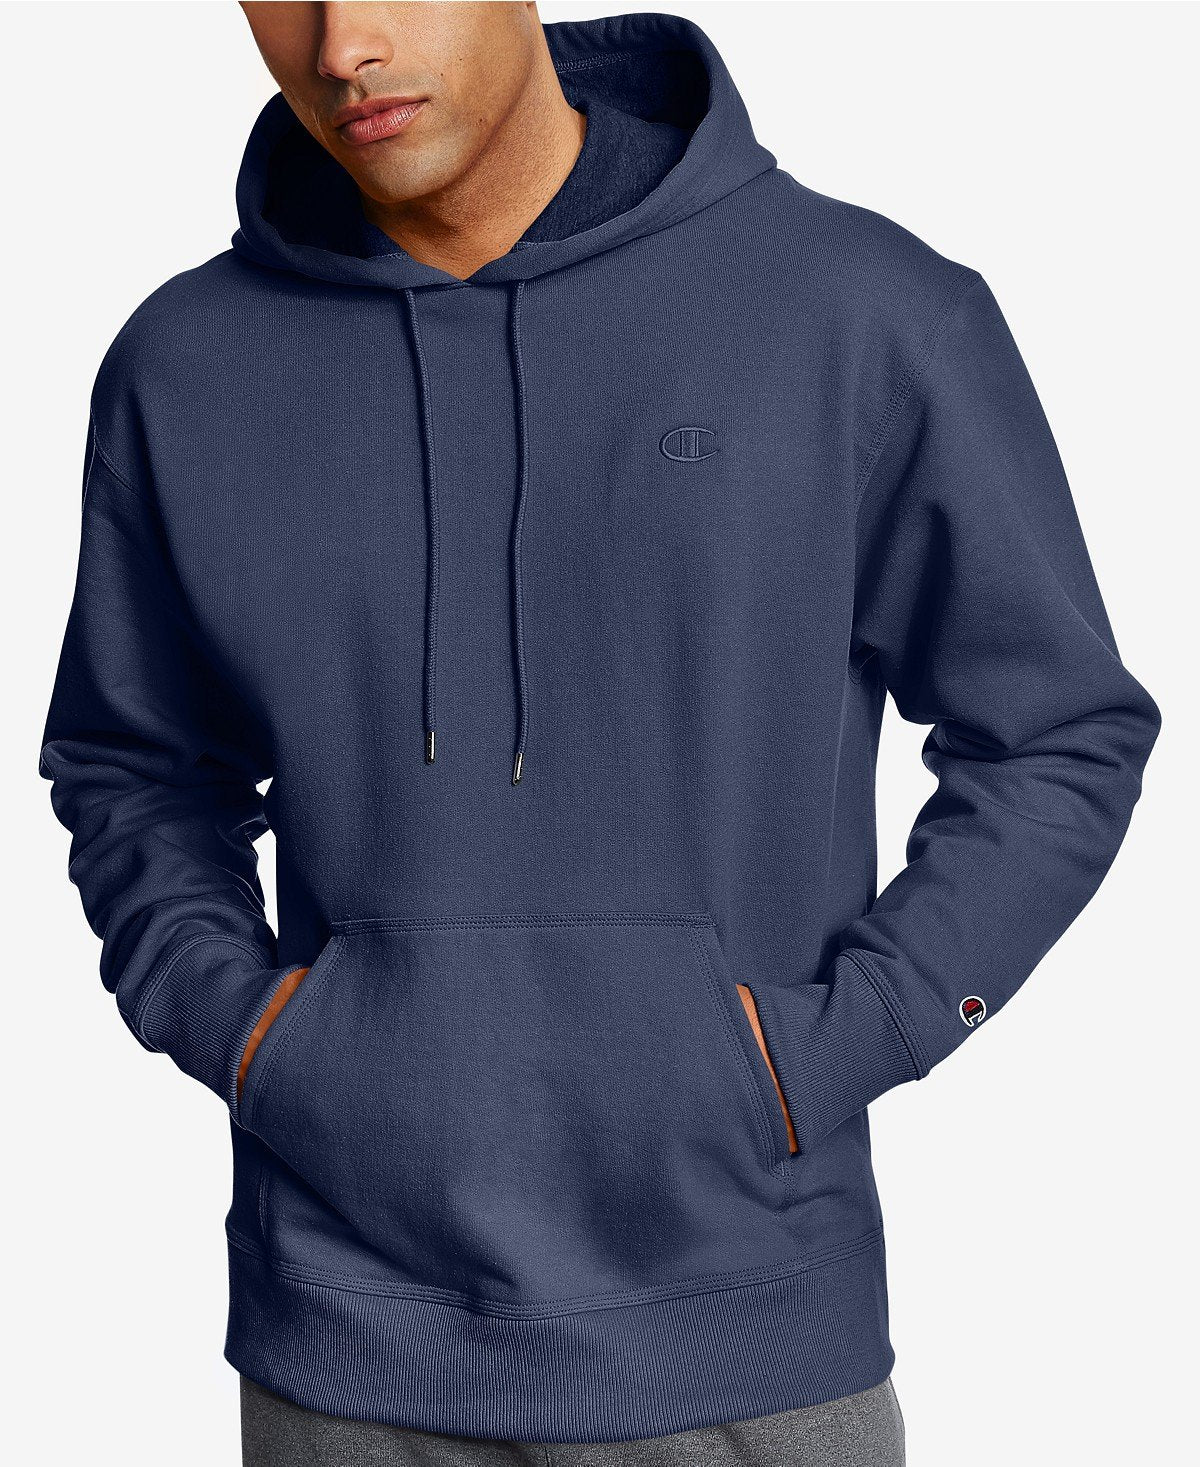 Champion Men's Powerblend® Sweats Pullover Hoodie - Navy (XL) - ADDROS.COM